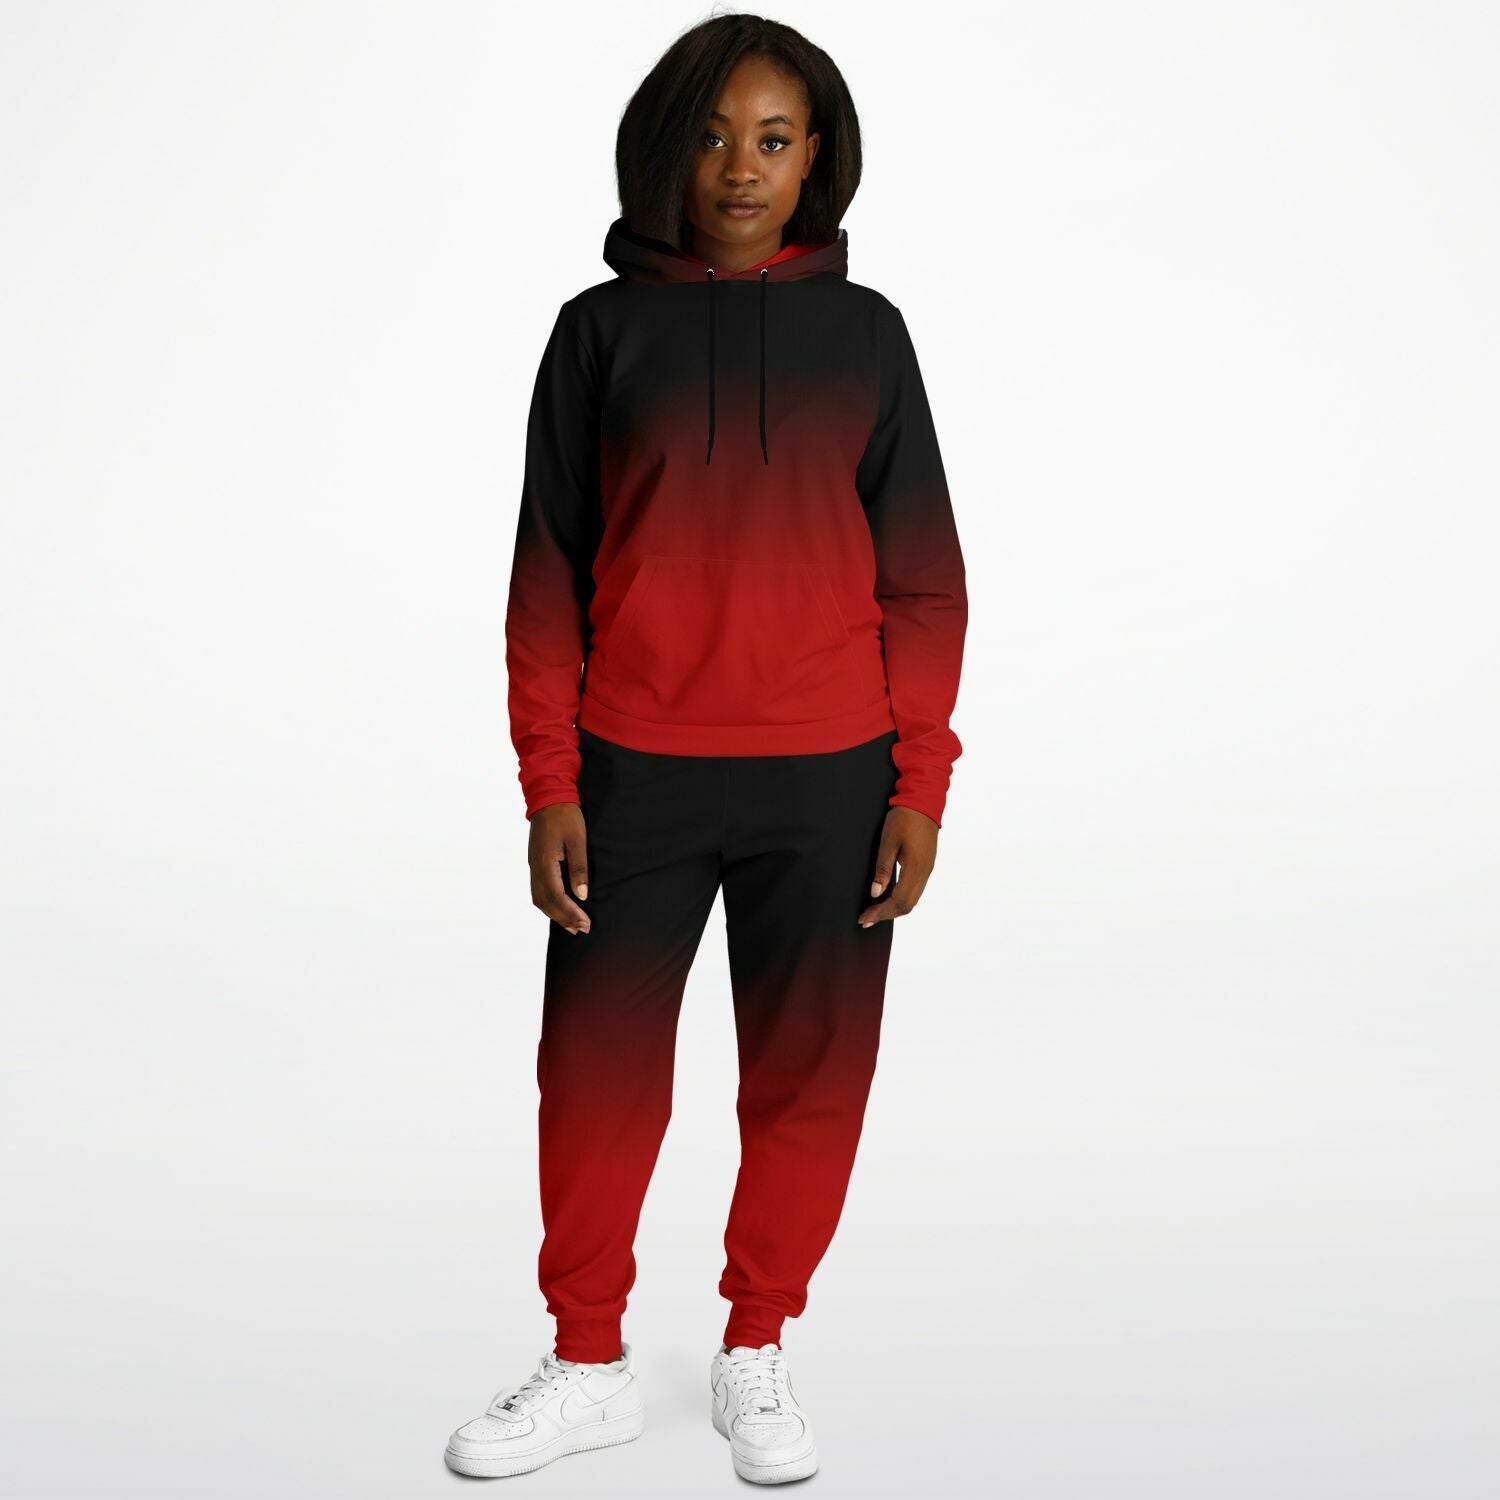 Black Red Ombre Hoodie Jogger Sweatsuit Set, Tie Dye Lounge Hooded Sweatshirt Sweatpants Women Men Cotton Matching Plus Size Sweats Starcove Fashion